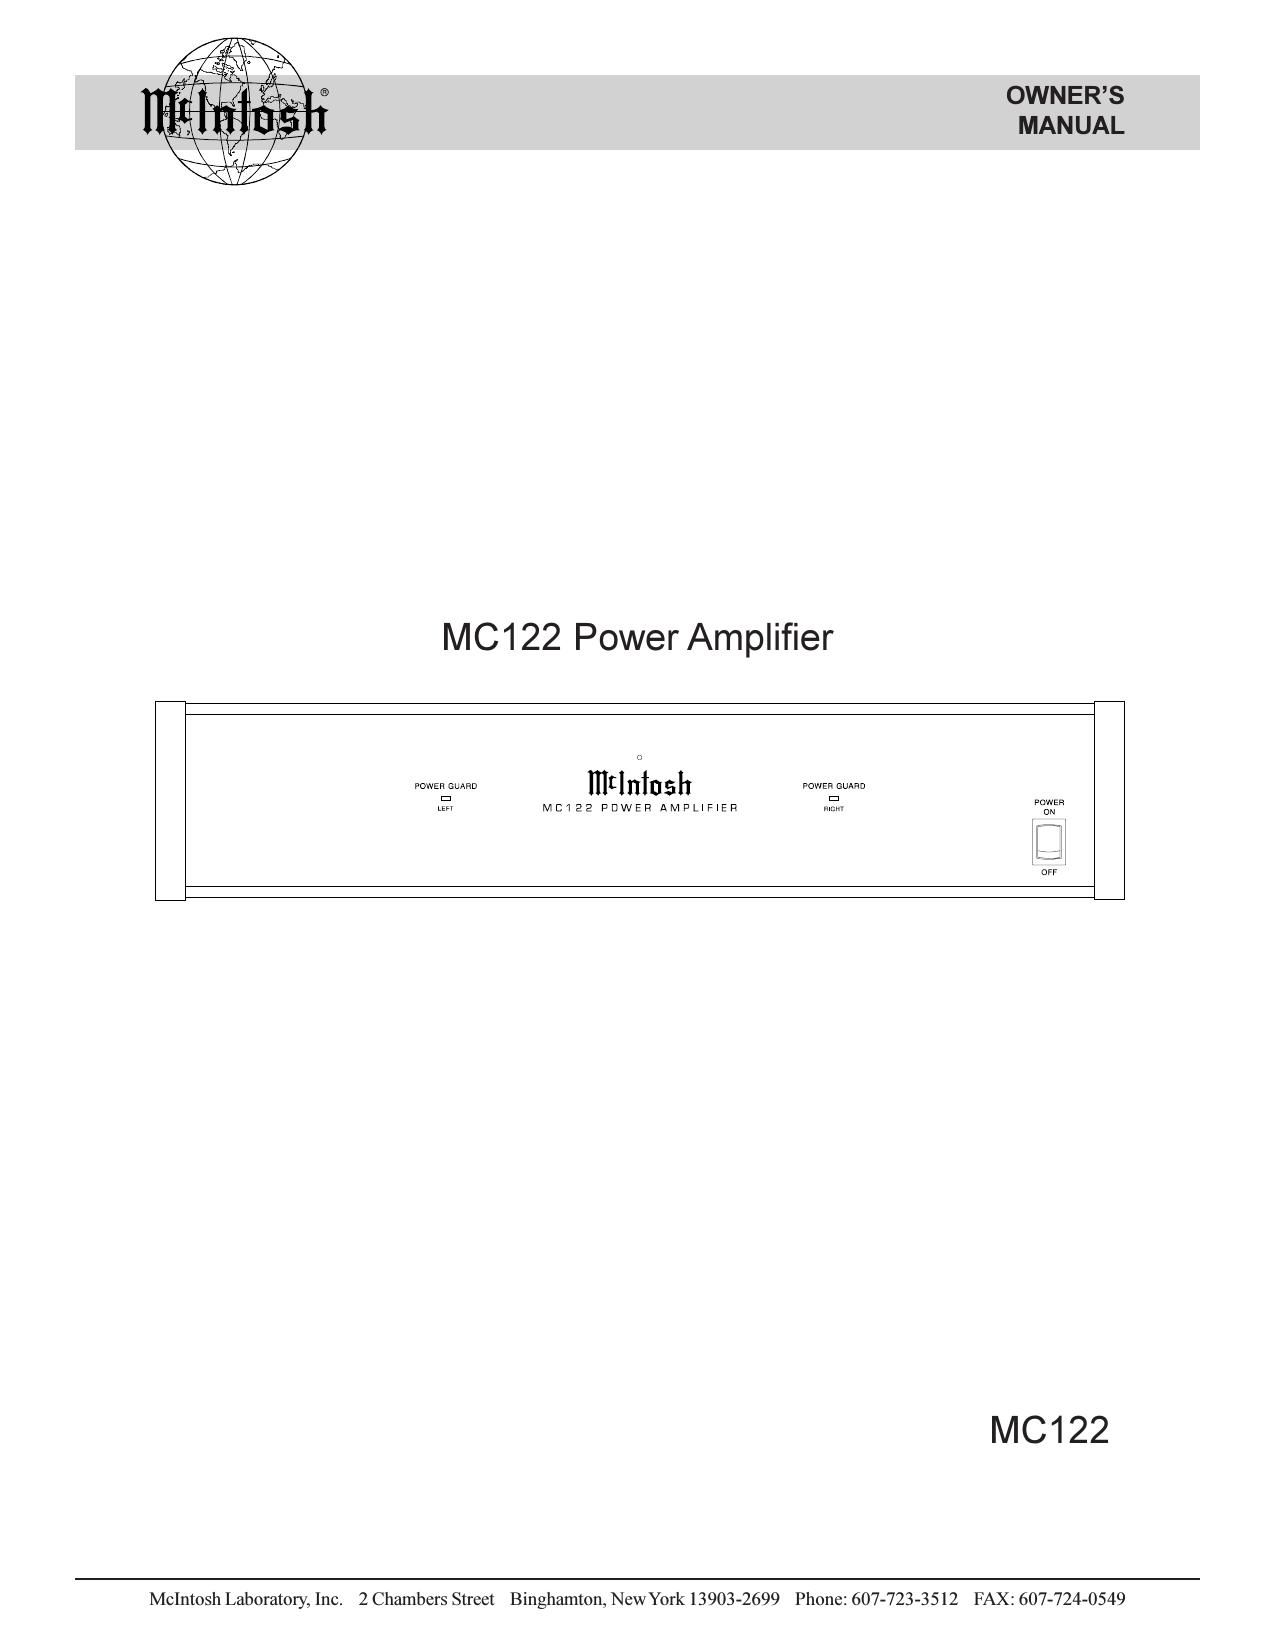 McIntosh MC 122 Owners Manual